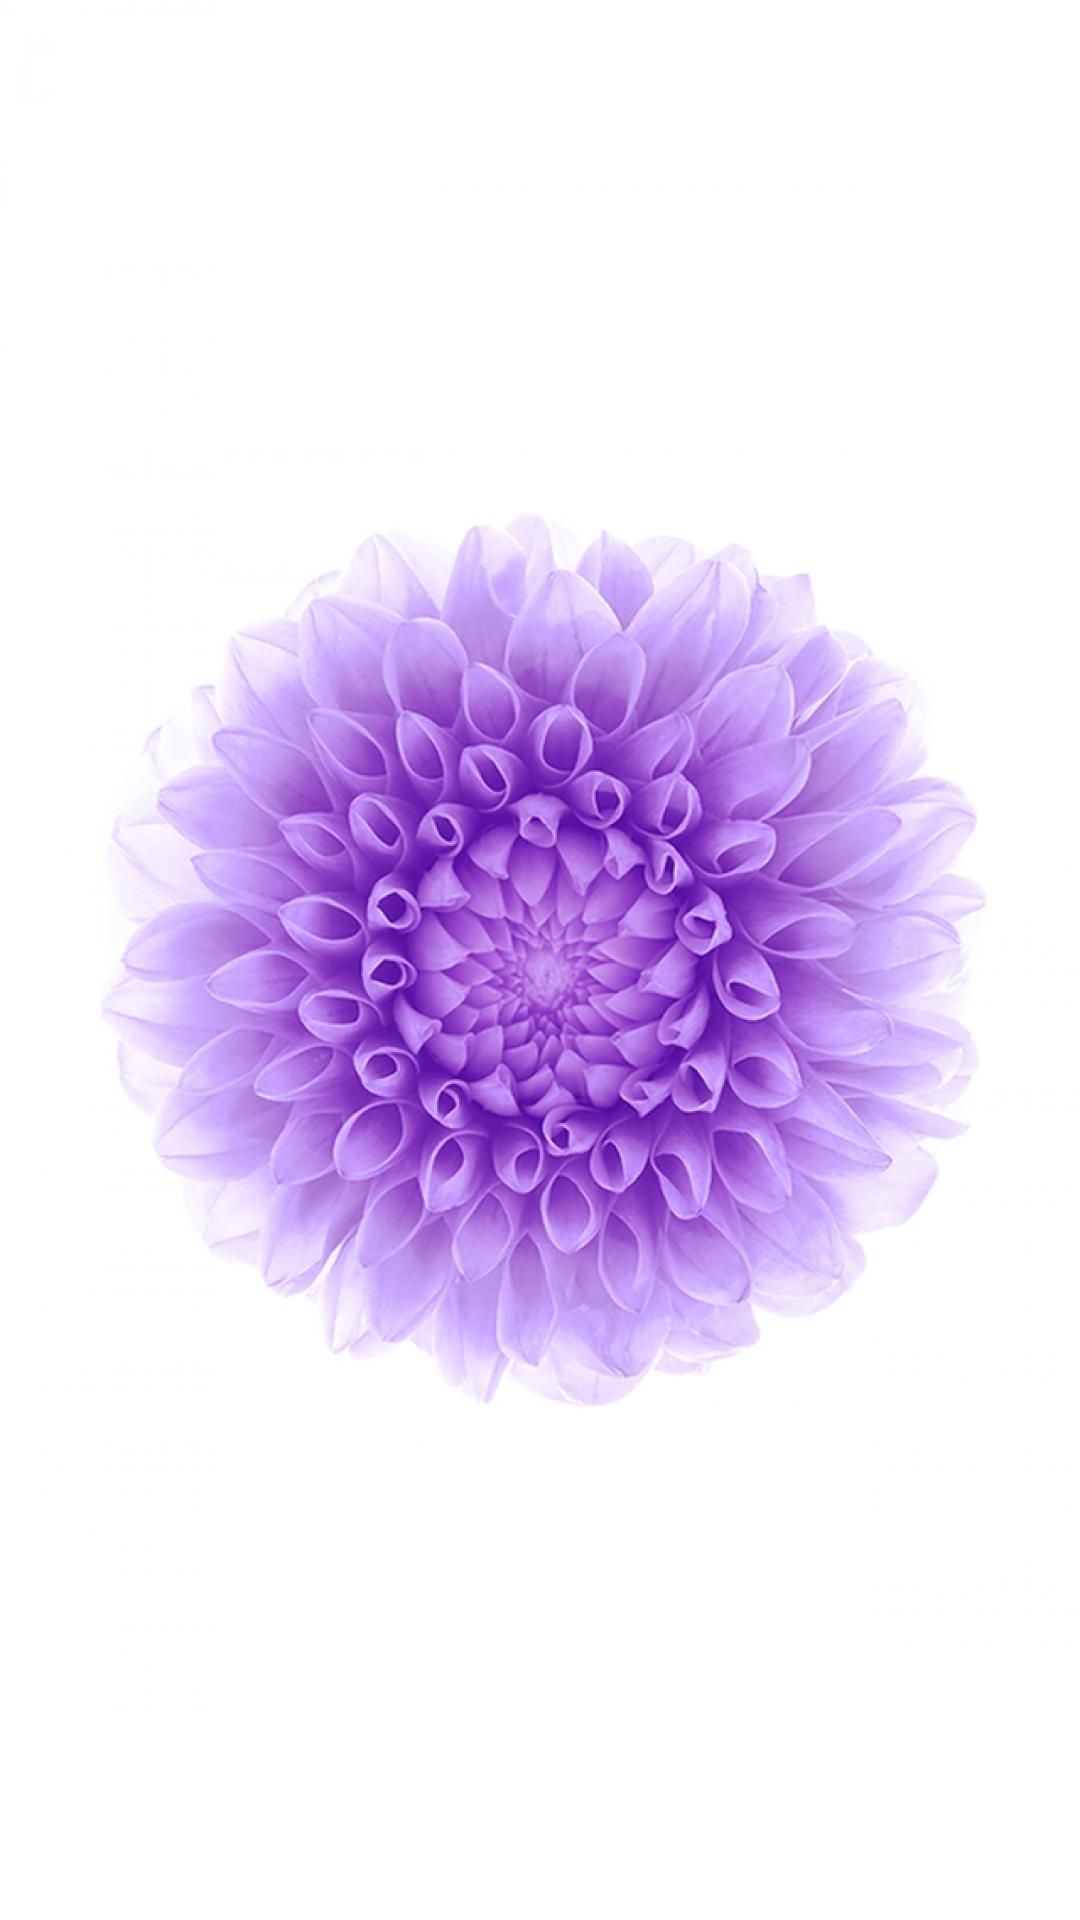 iPhone6wallpaper #purple #flower | iPhone 7 Wallpaper | Pinterest ...